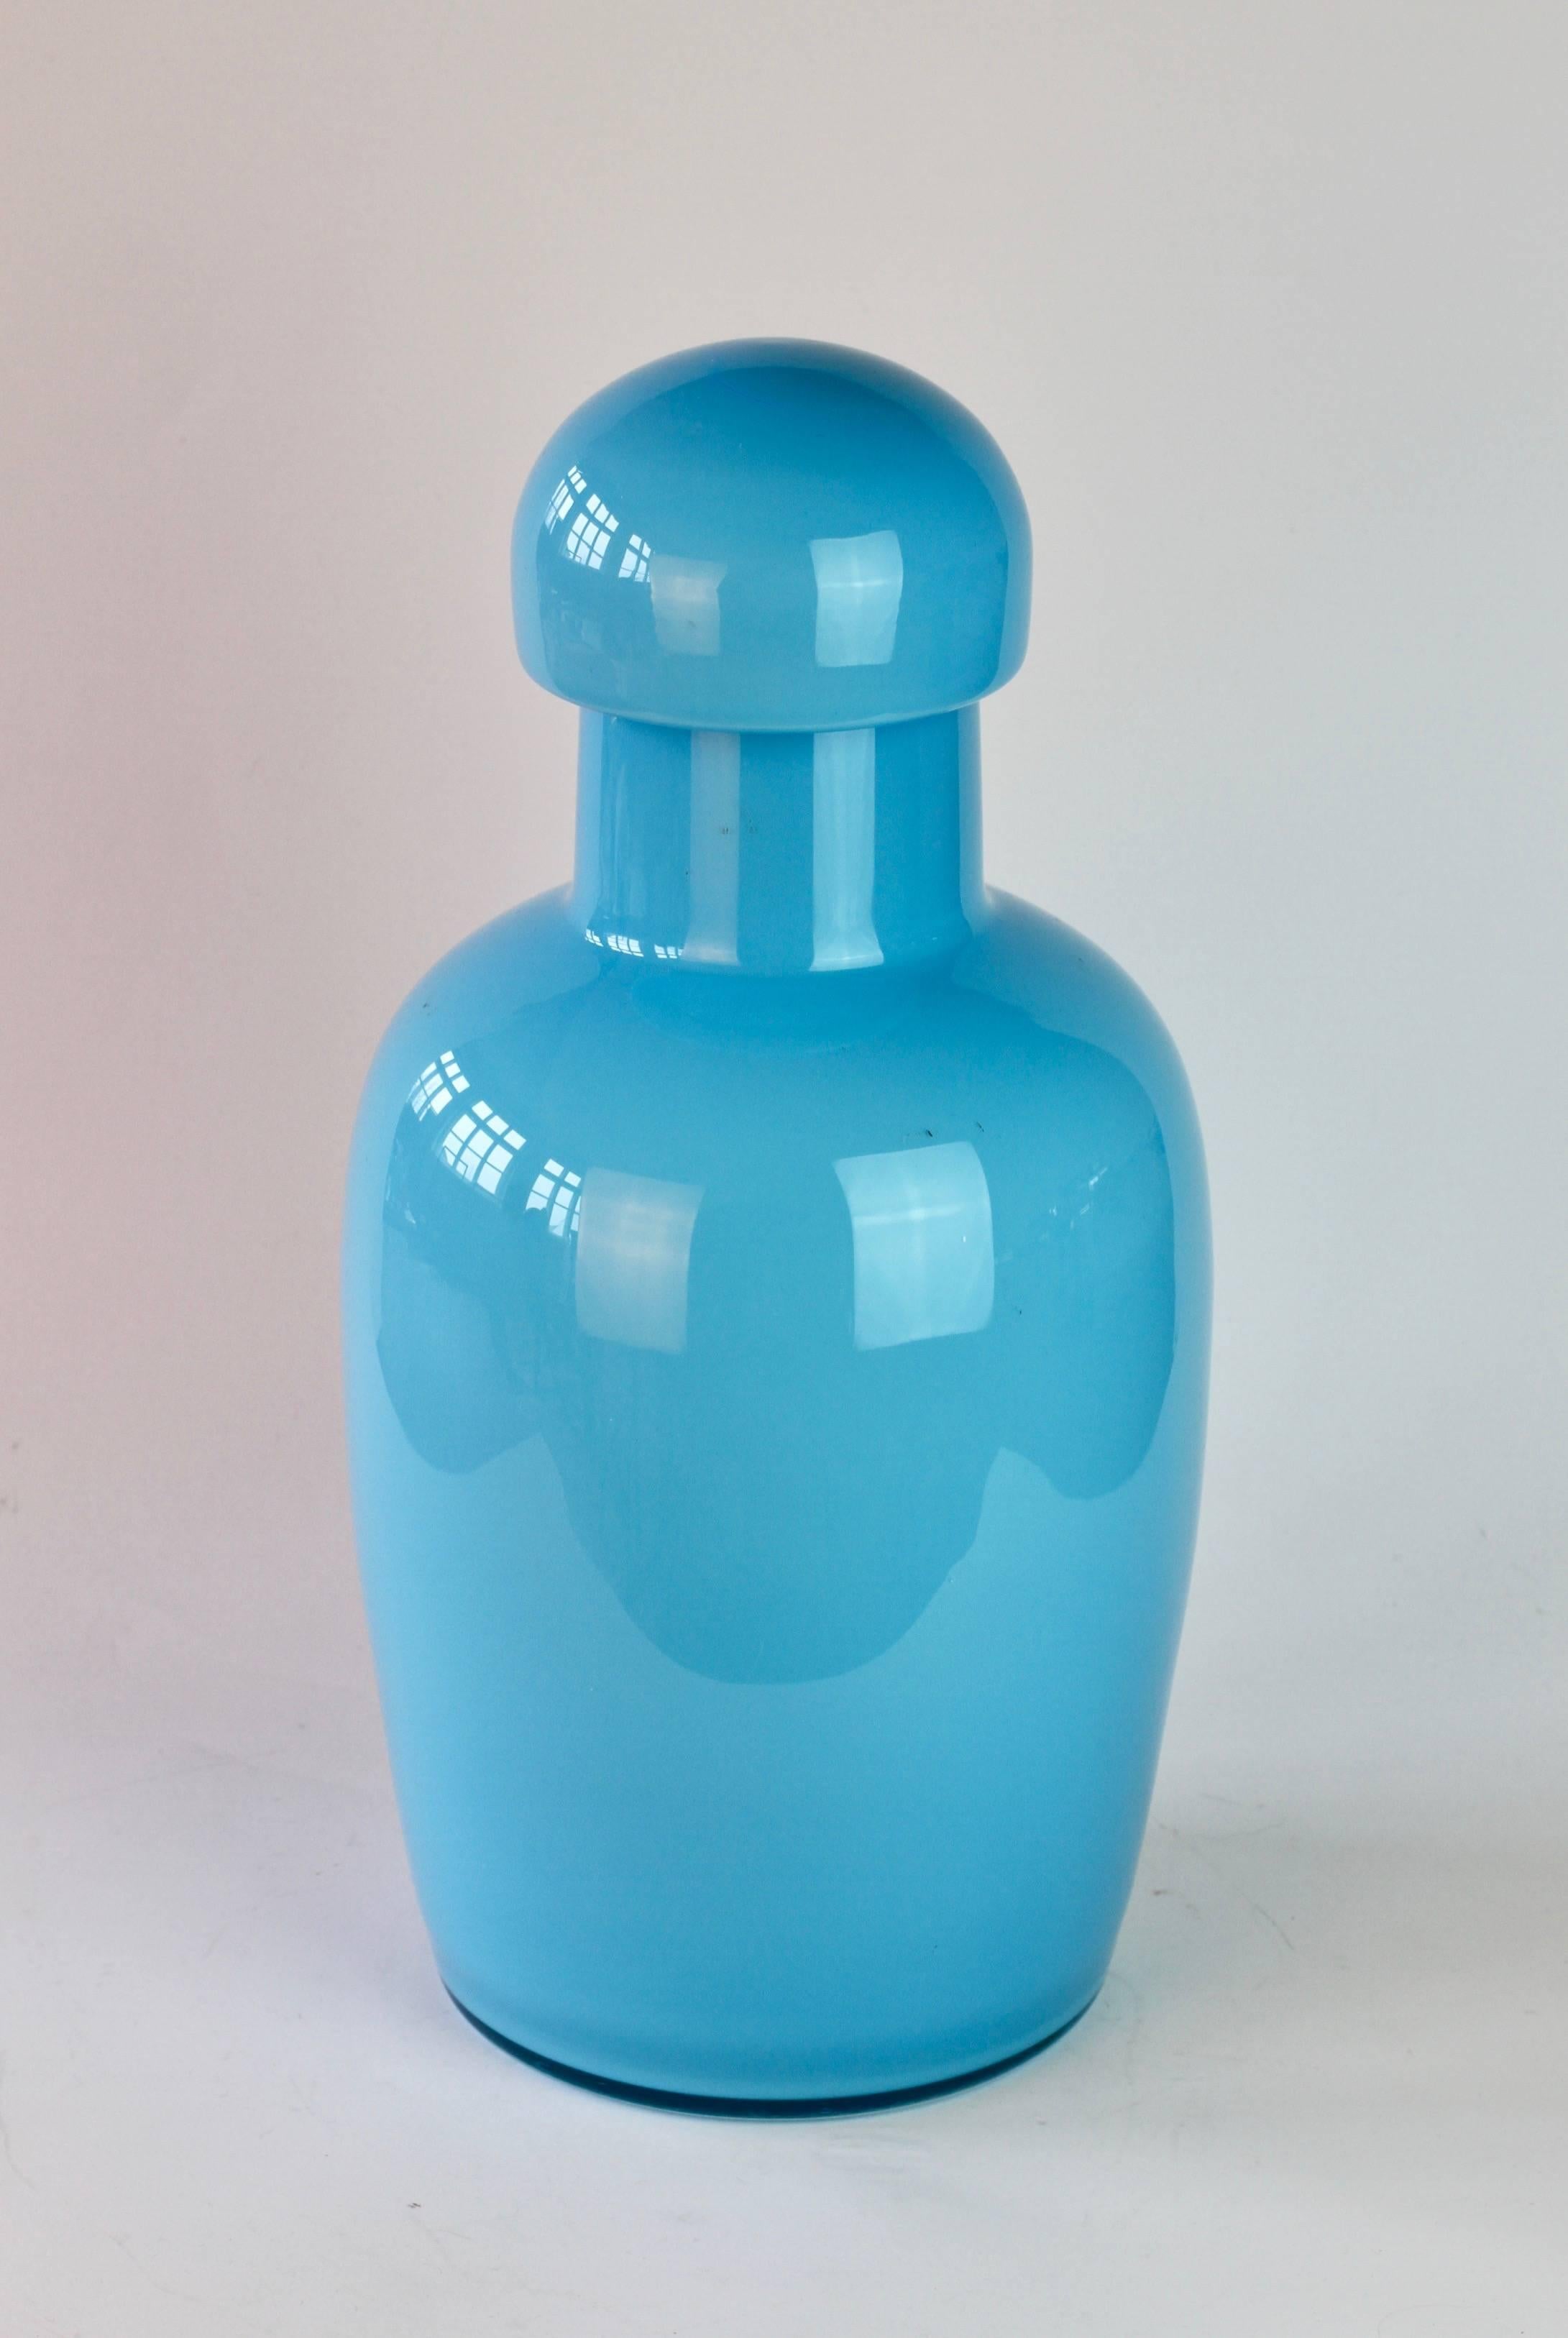 blue glass urn